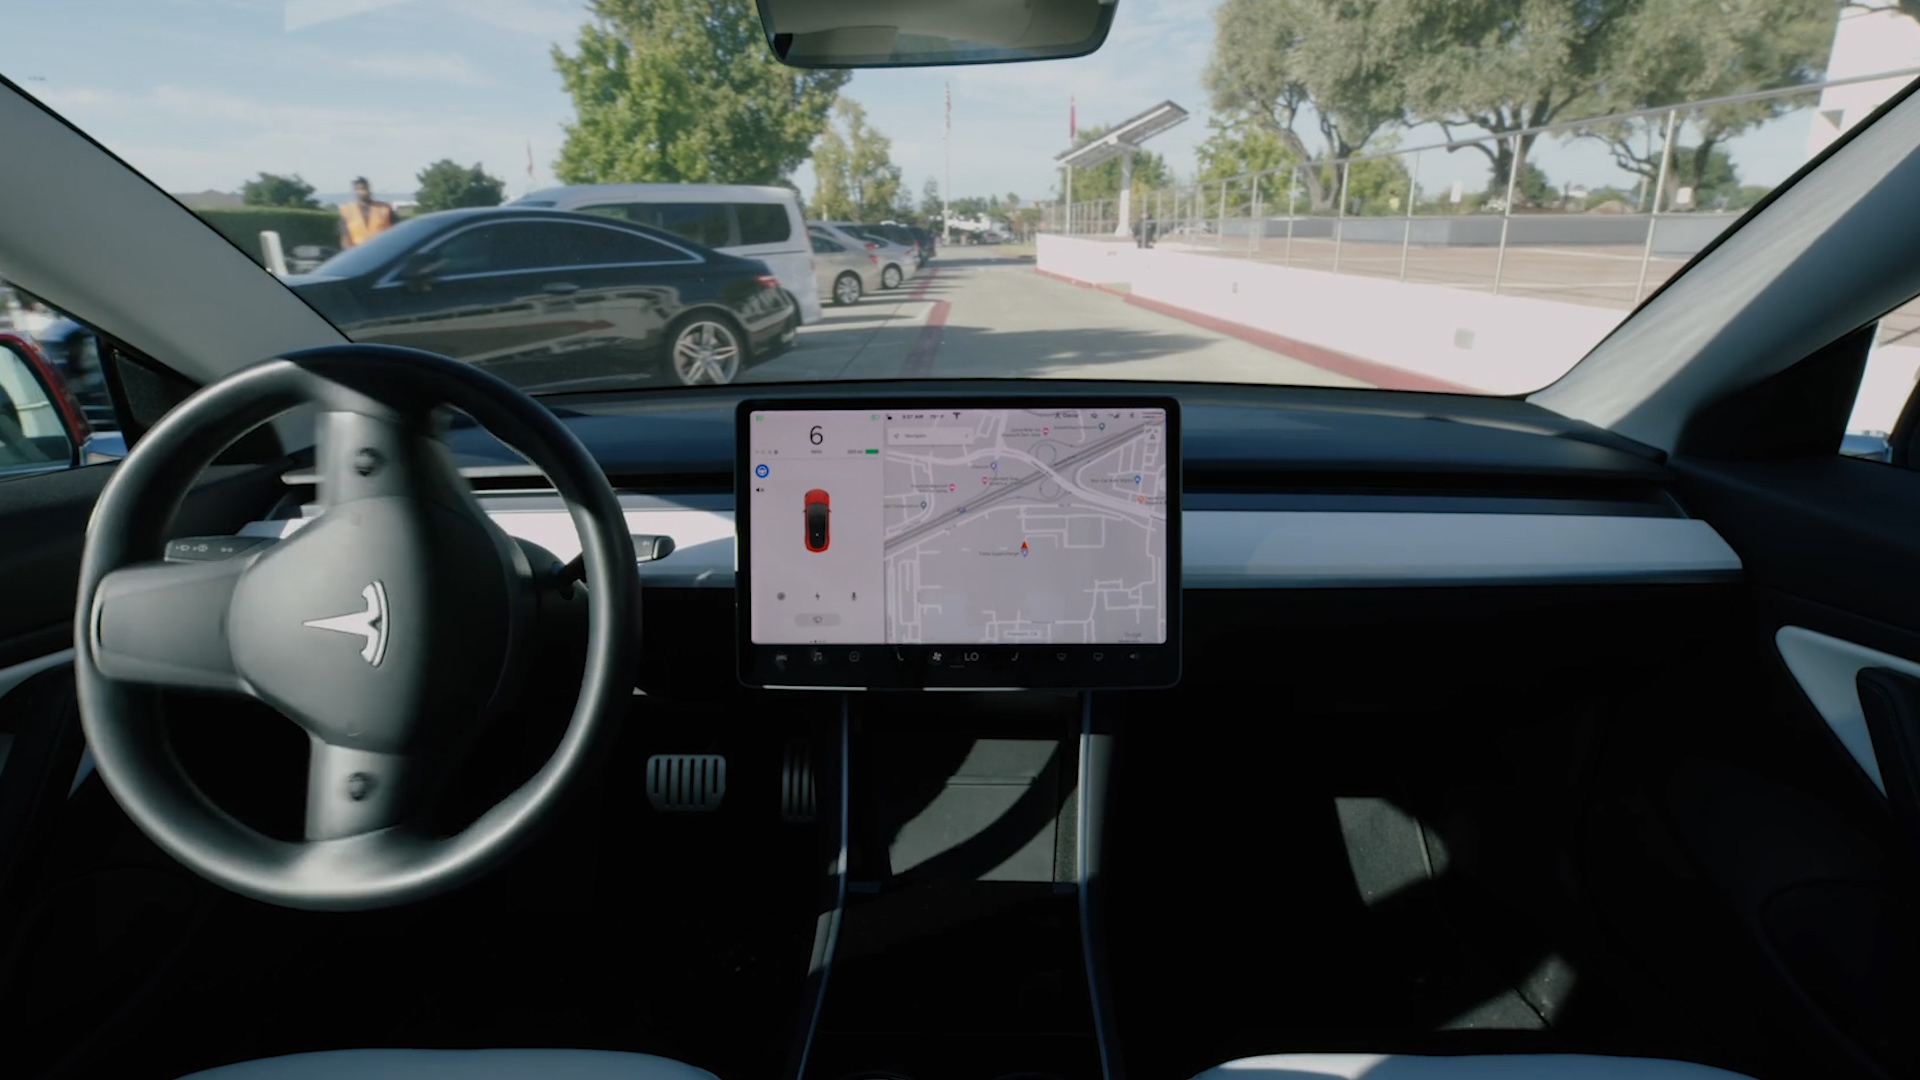 New Tesla Cybertruck Image Shows Location Of Alleged Hidden